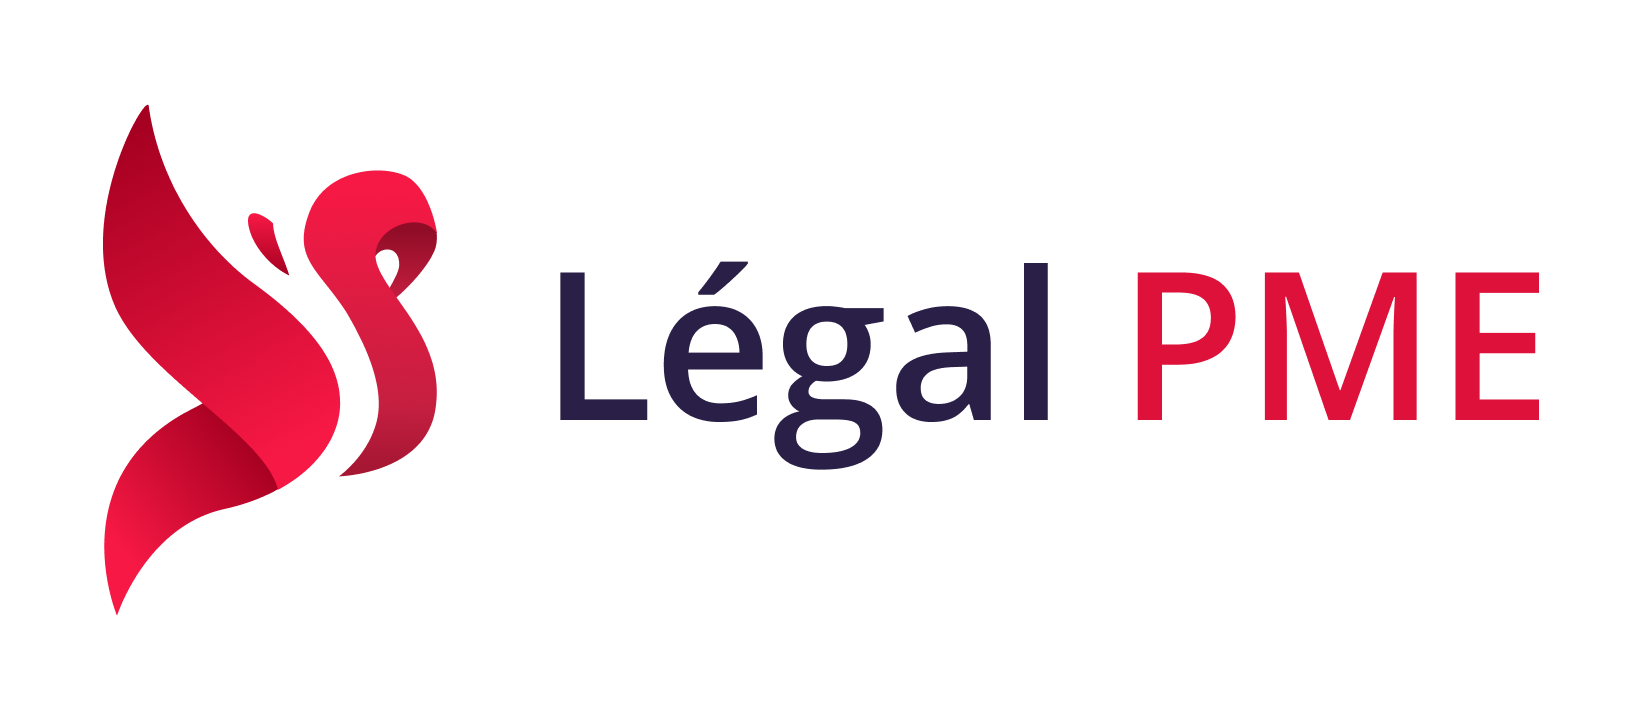 Légal PME_logo_dark